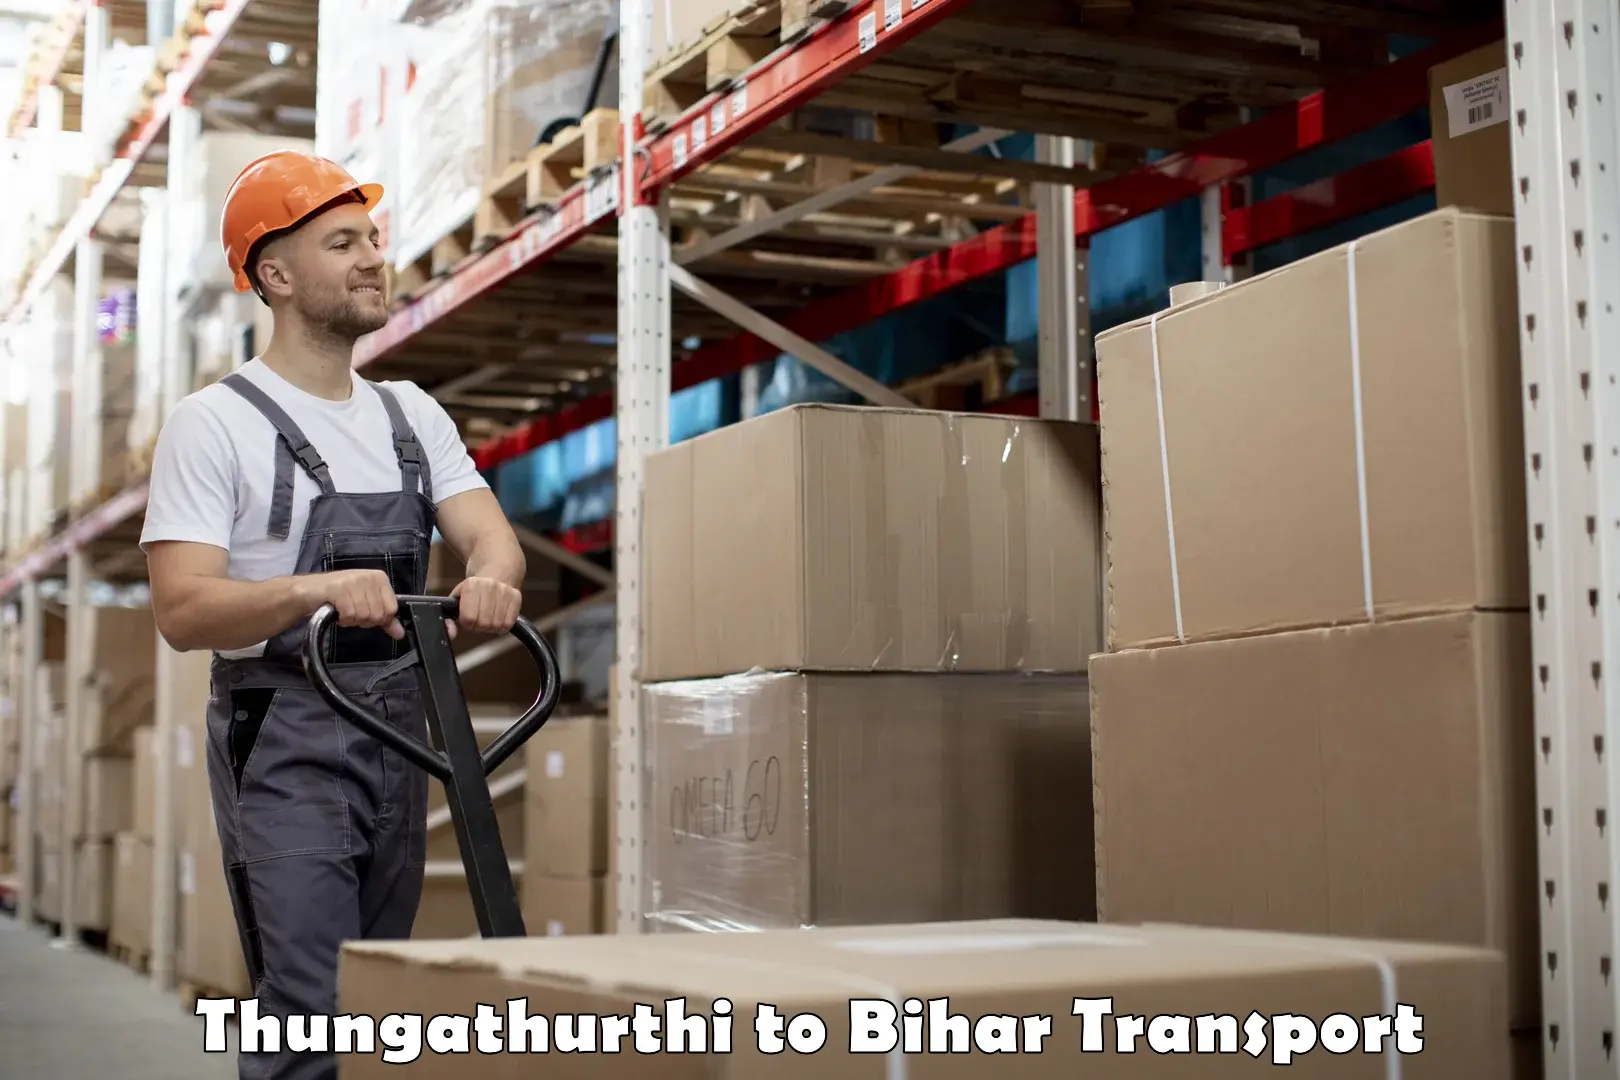 Truck transport companies in India Thungathurthi to Kaluahi